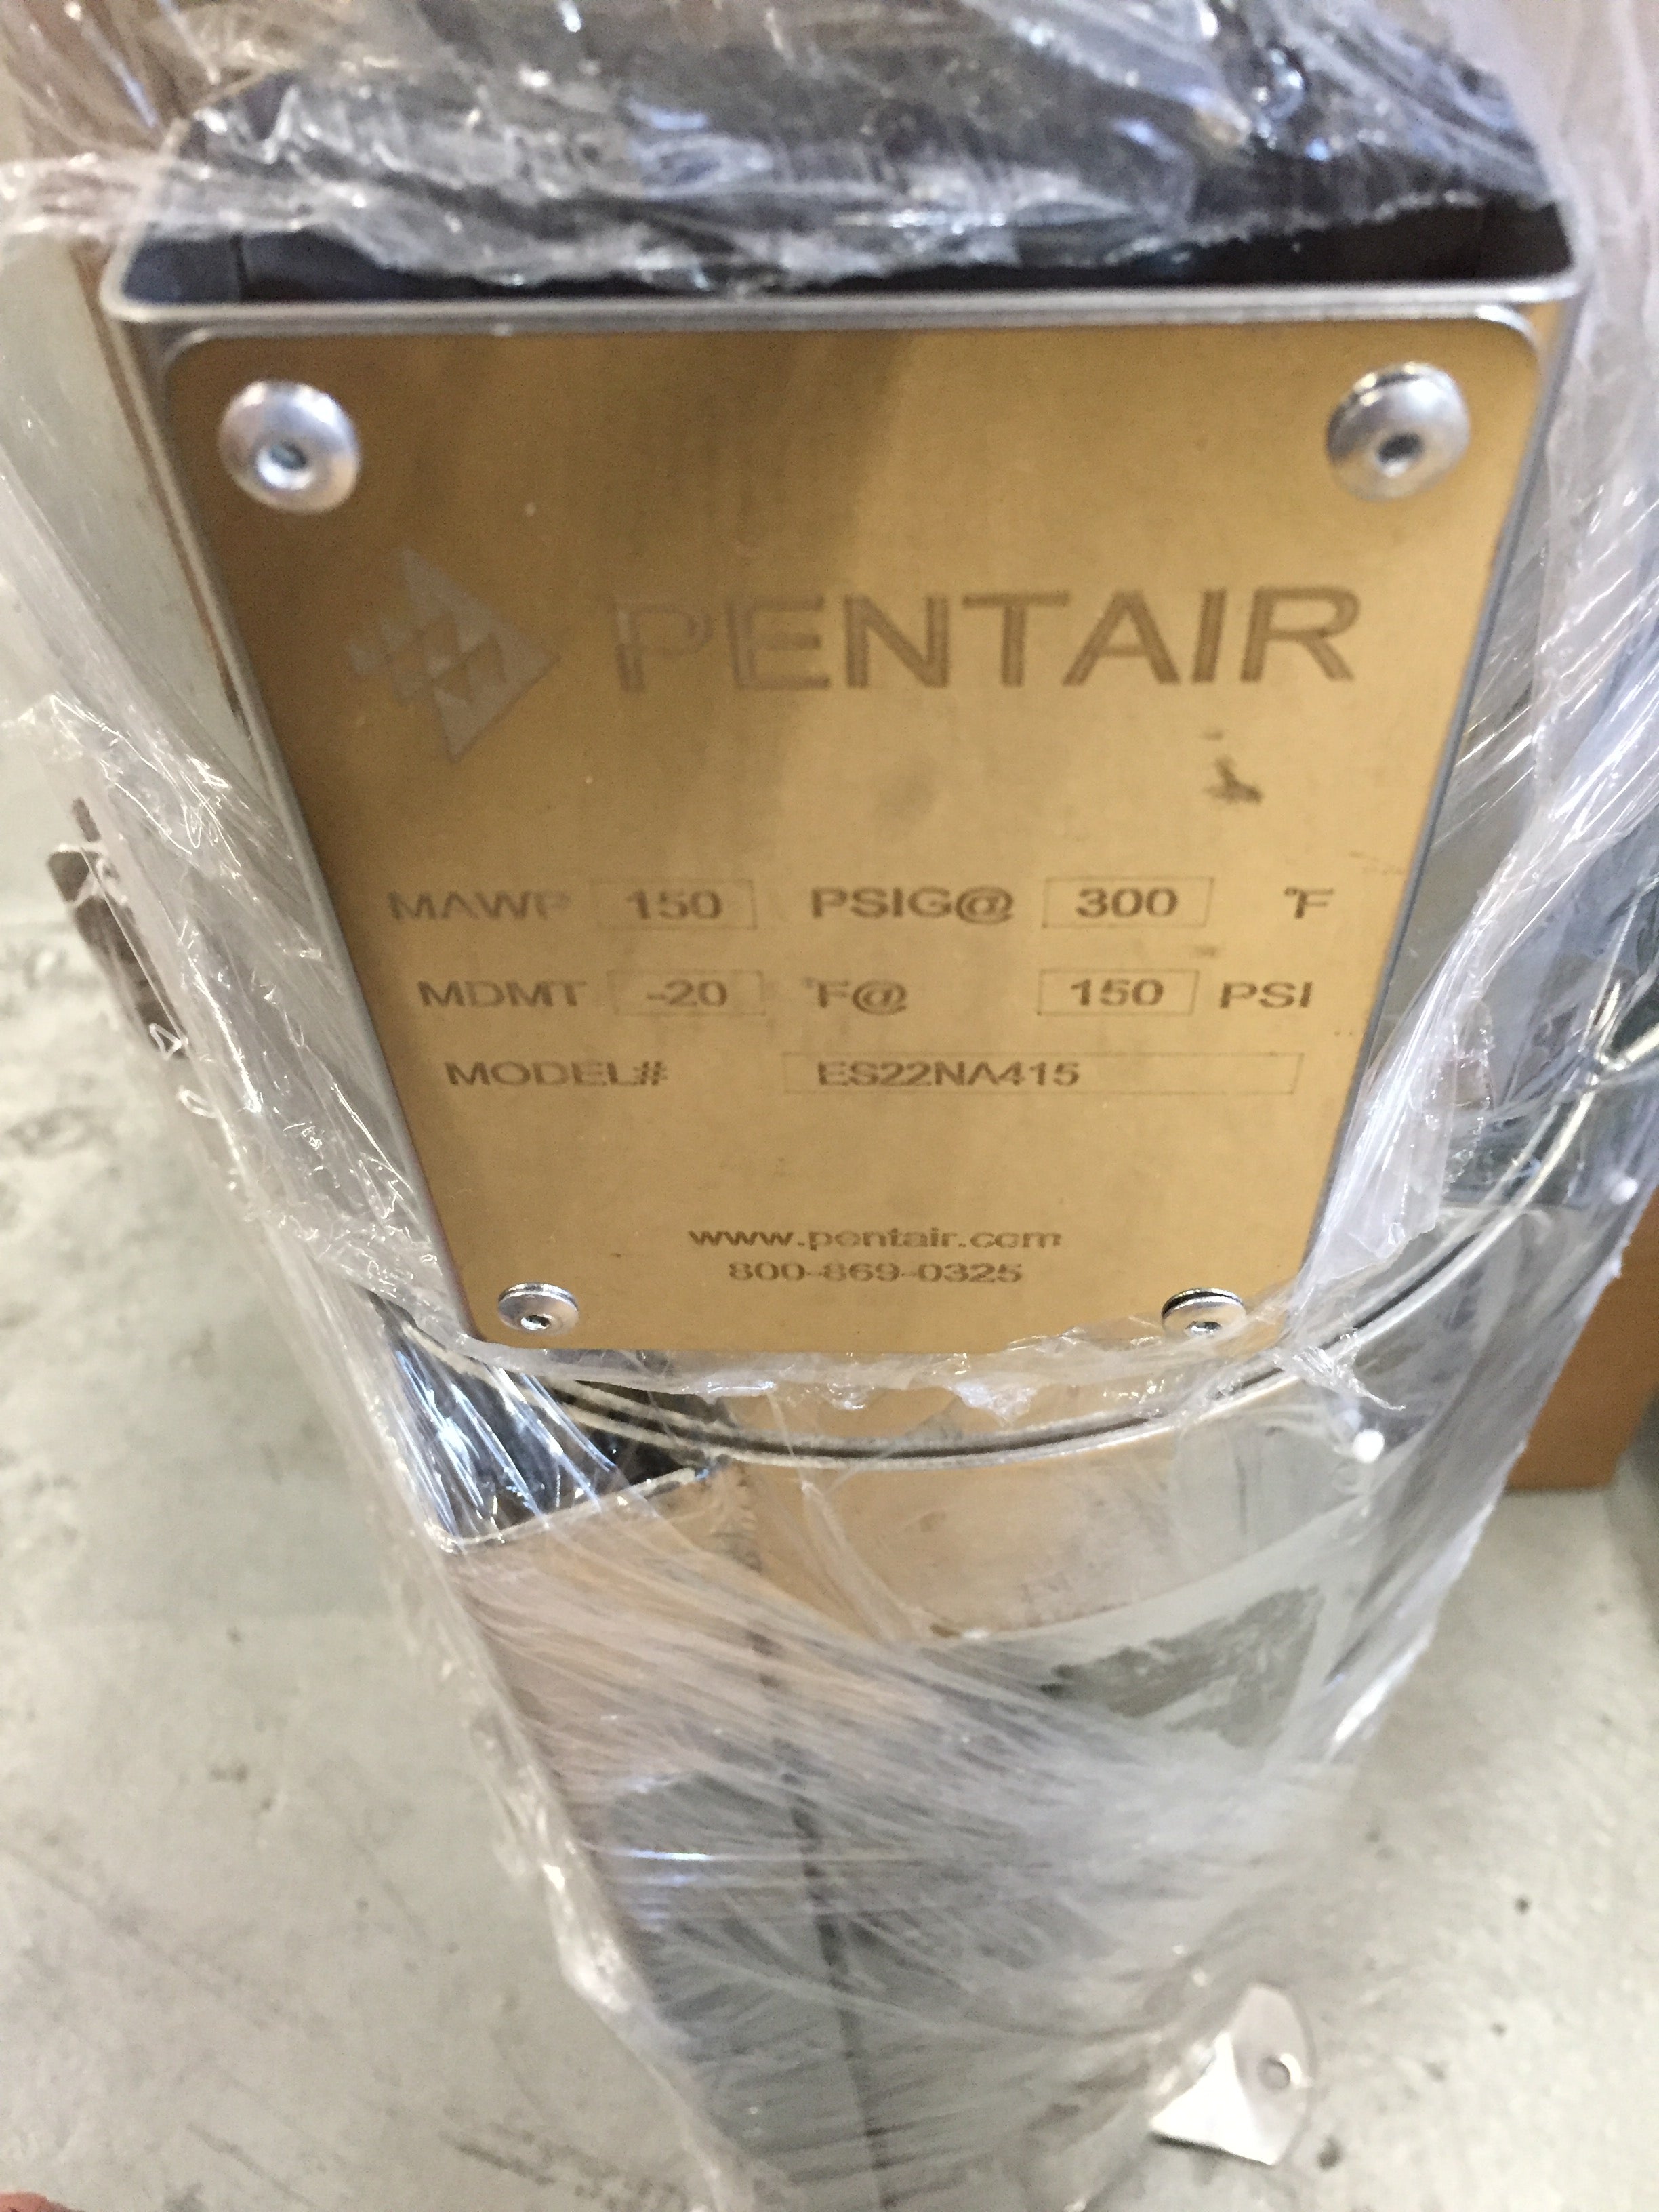 Pentair ES22NA415 Stainless Steel Bag Housing Filter 150PSI *NO ORIGINAL BOX* (8191058280686)